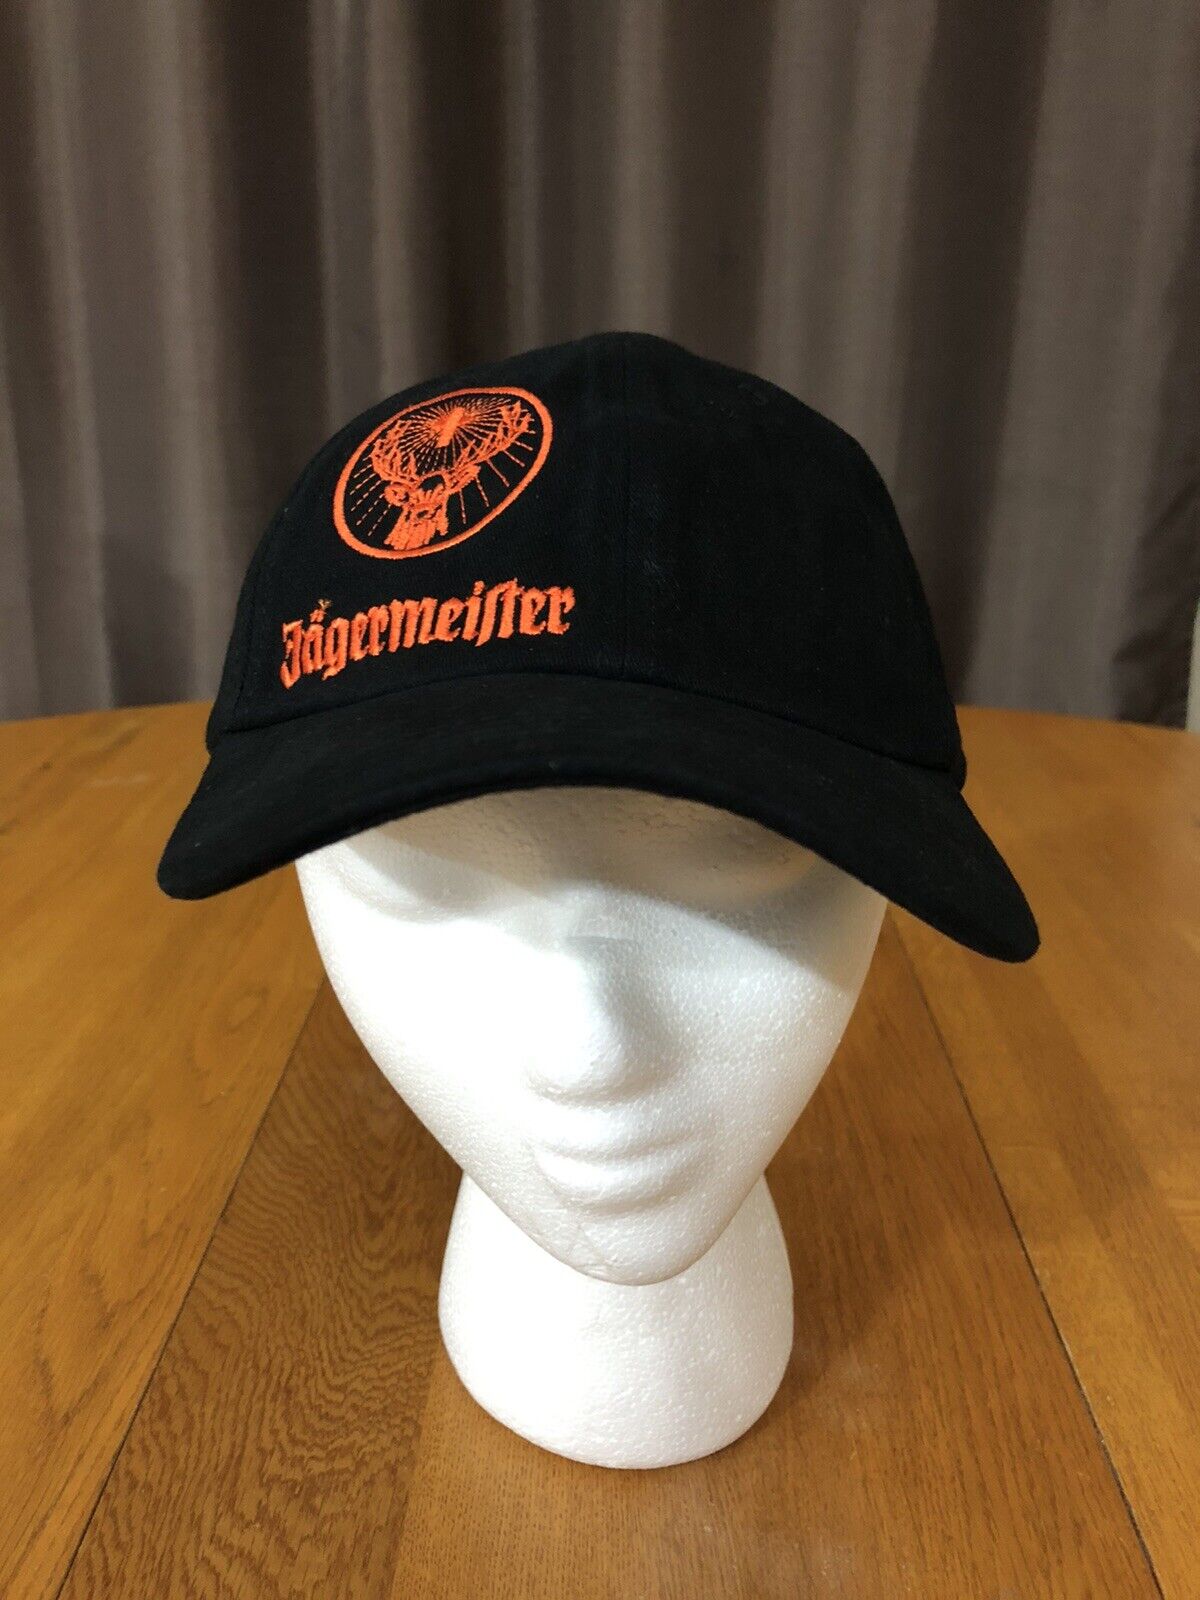 NEW JAGERMEISTER ADJUSTABLE CAP HAT BLACK & ORANGE